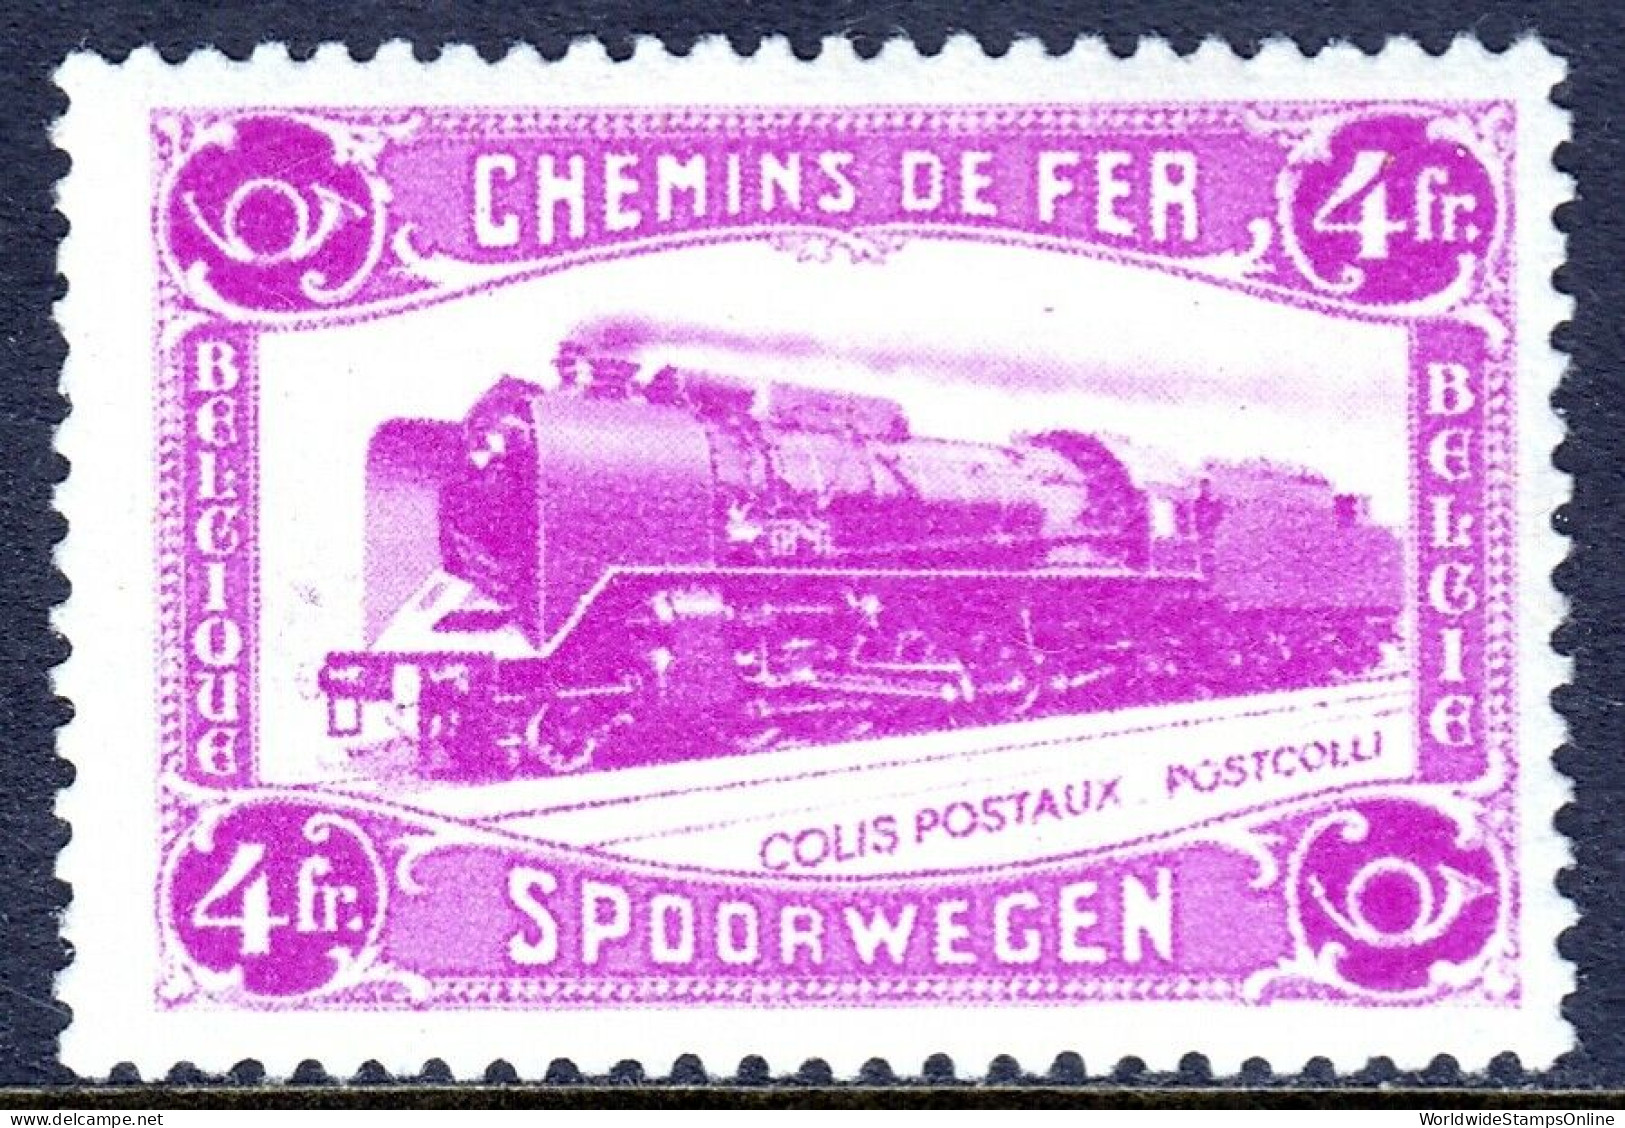 BELGIUM — SCOTT Q182 — 1934 4fr RAILWAY ISSUE — MH — SCV $9.50 - Postfris